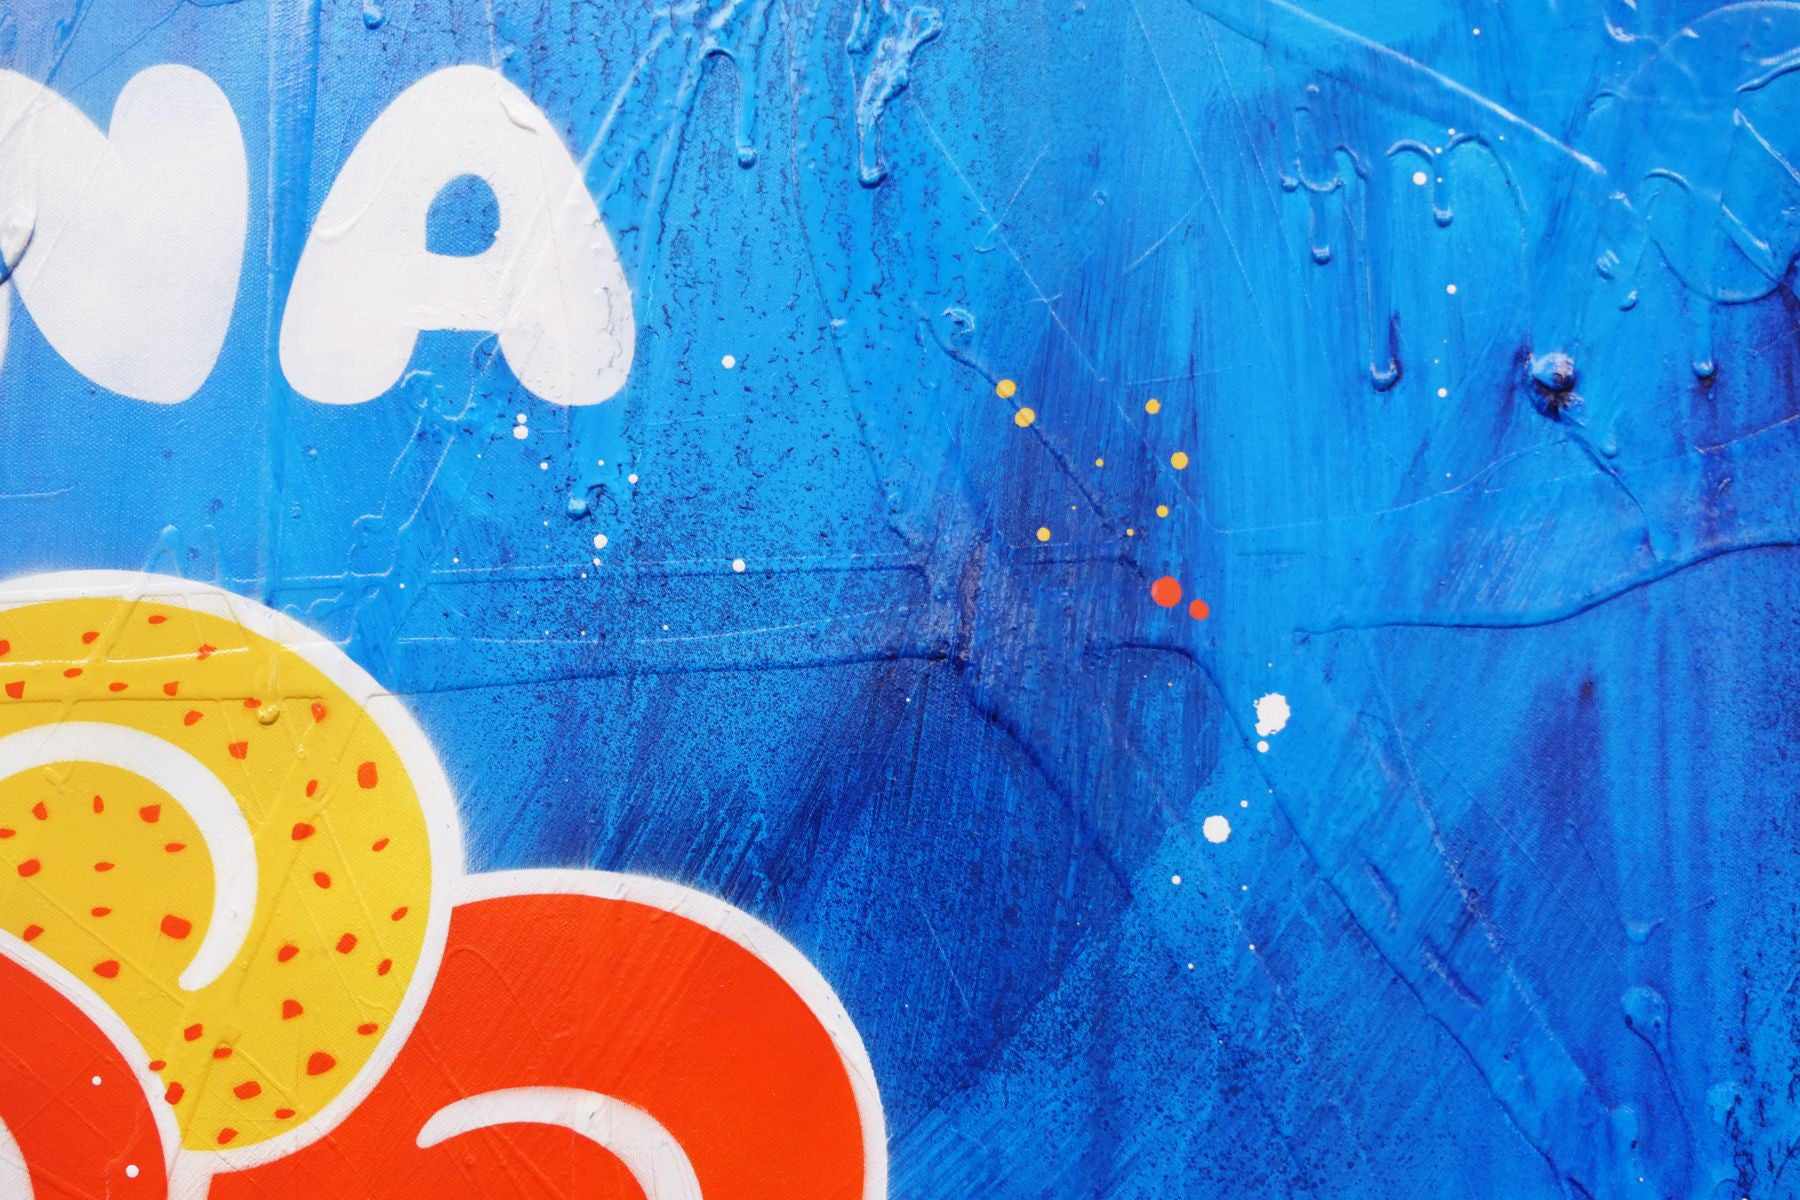 Orangina Blue 140cm x 100cm Textured Urban Pop Art Painting